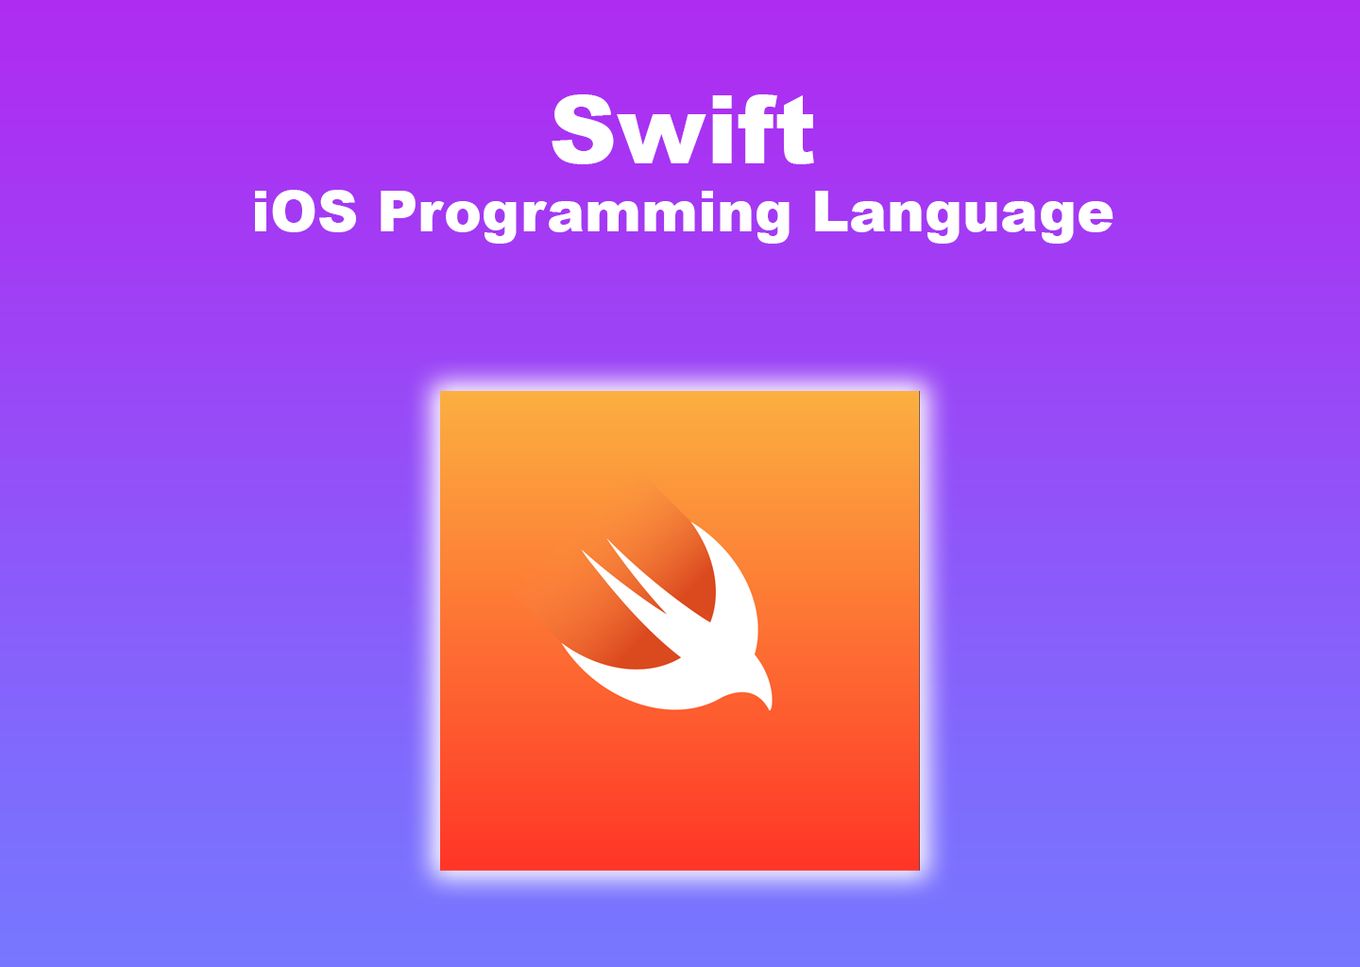 Swift iOS programming language